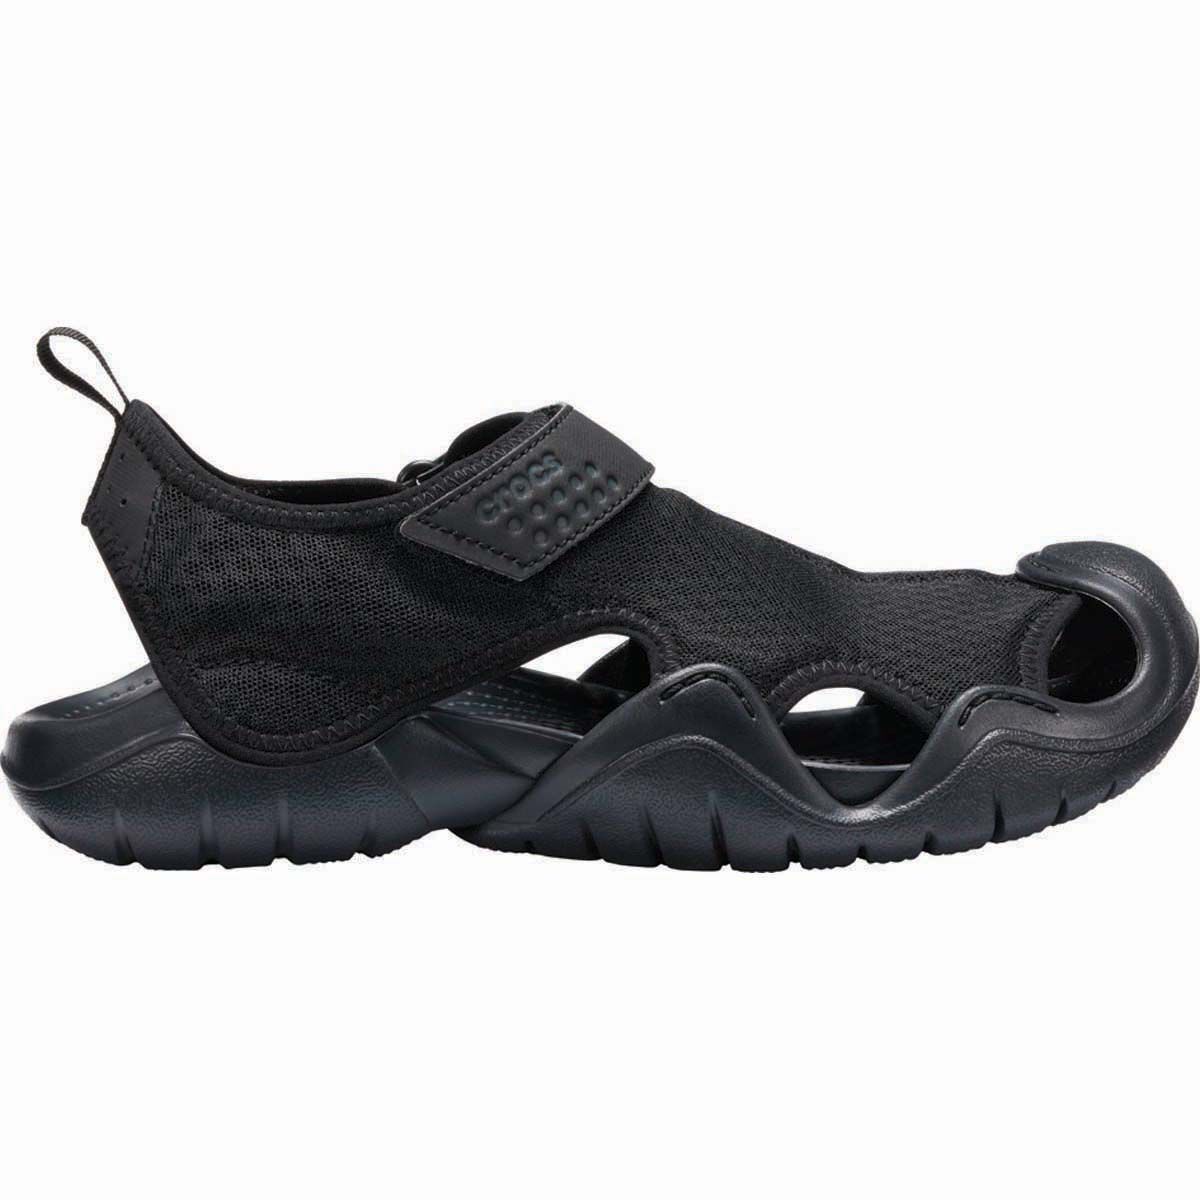 croc water shoes mens